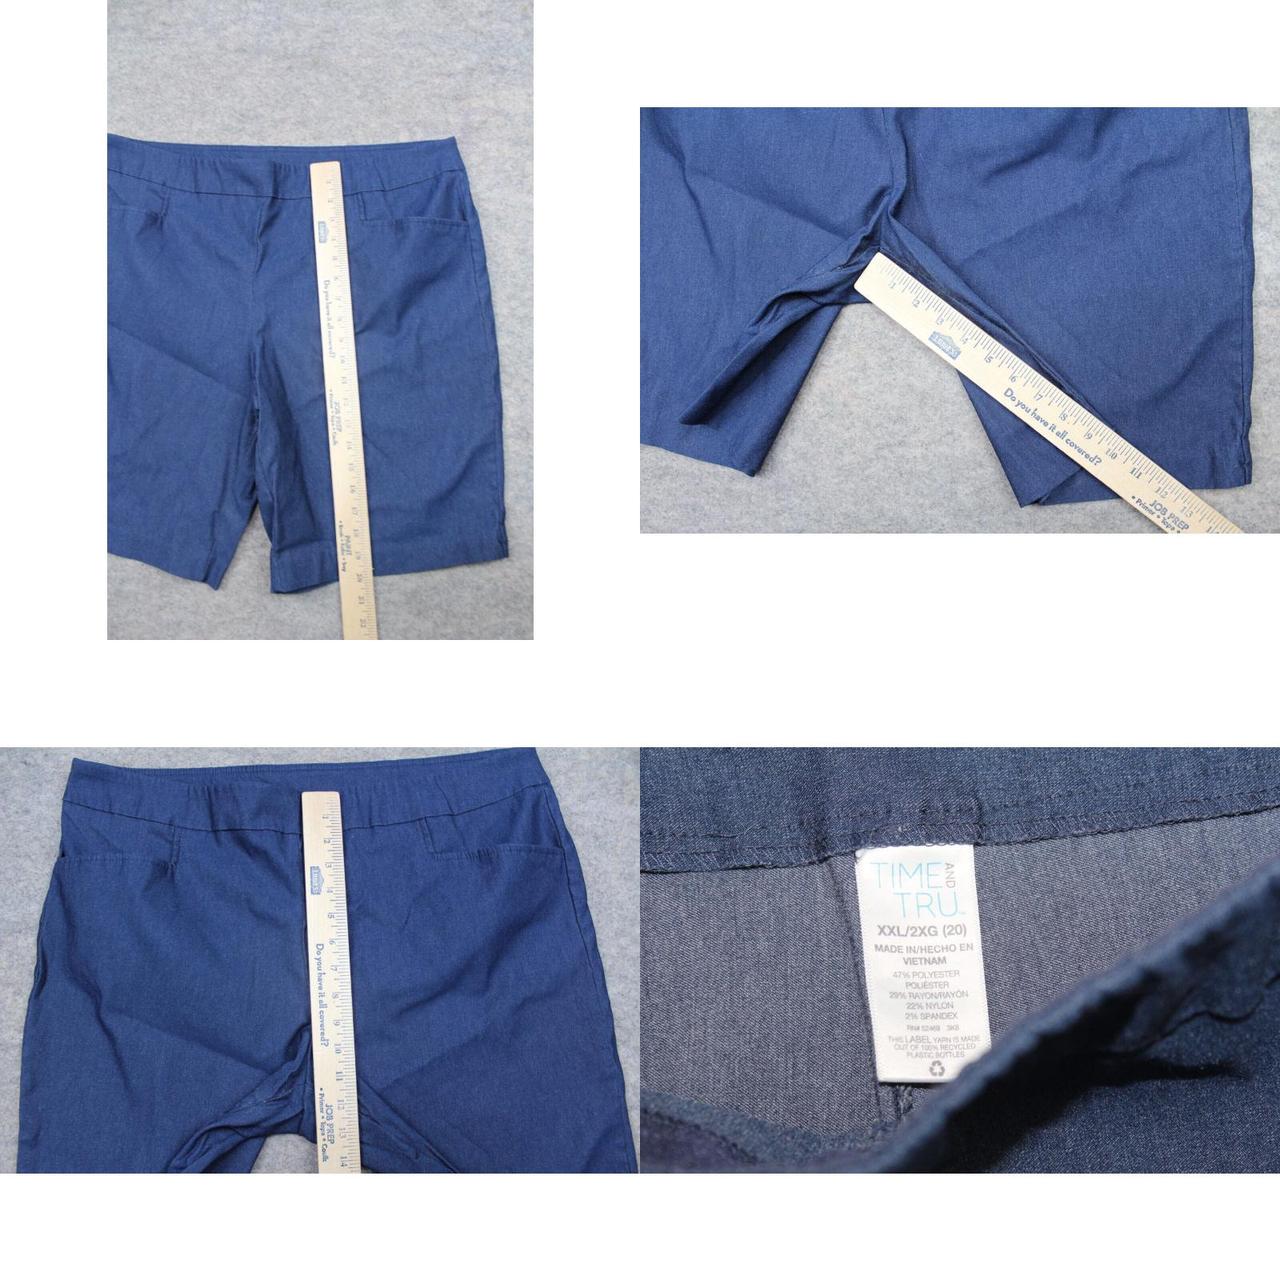 Timex Women's Blue Shorts (4)